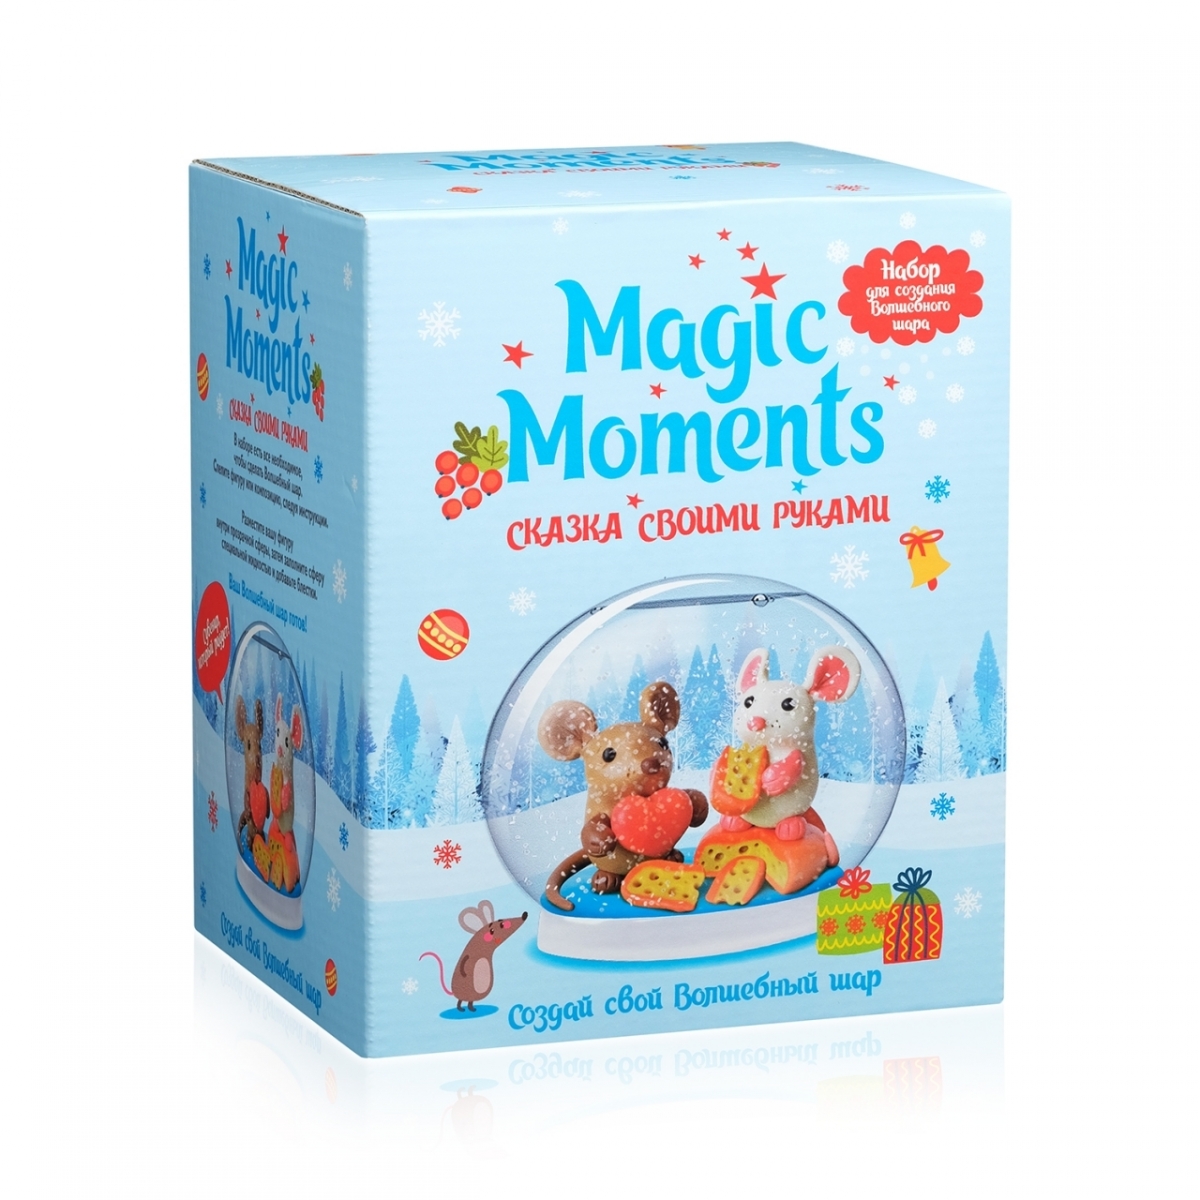     Magic Moments   - 